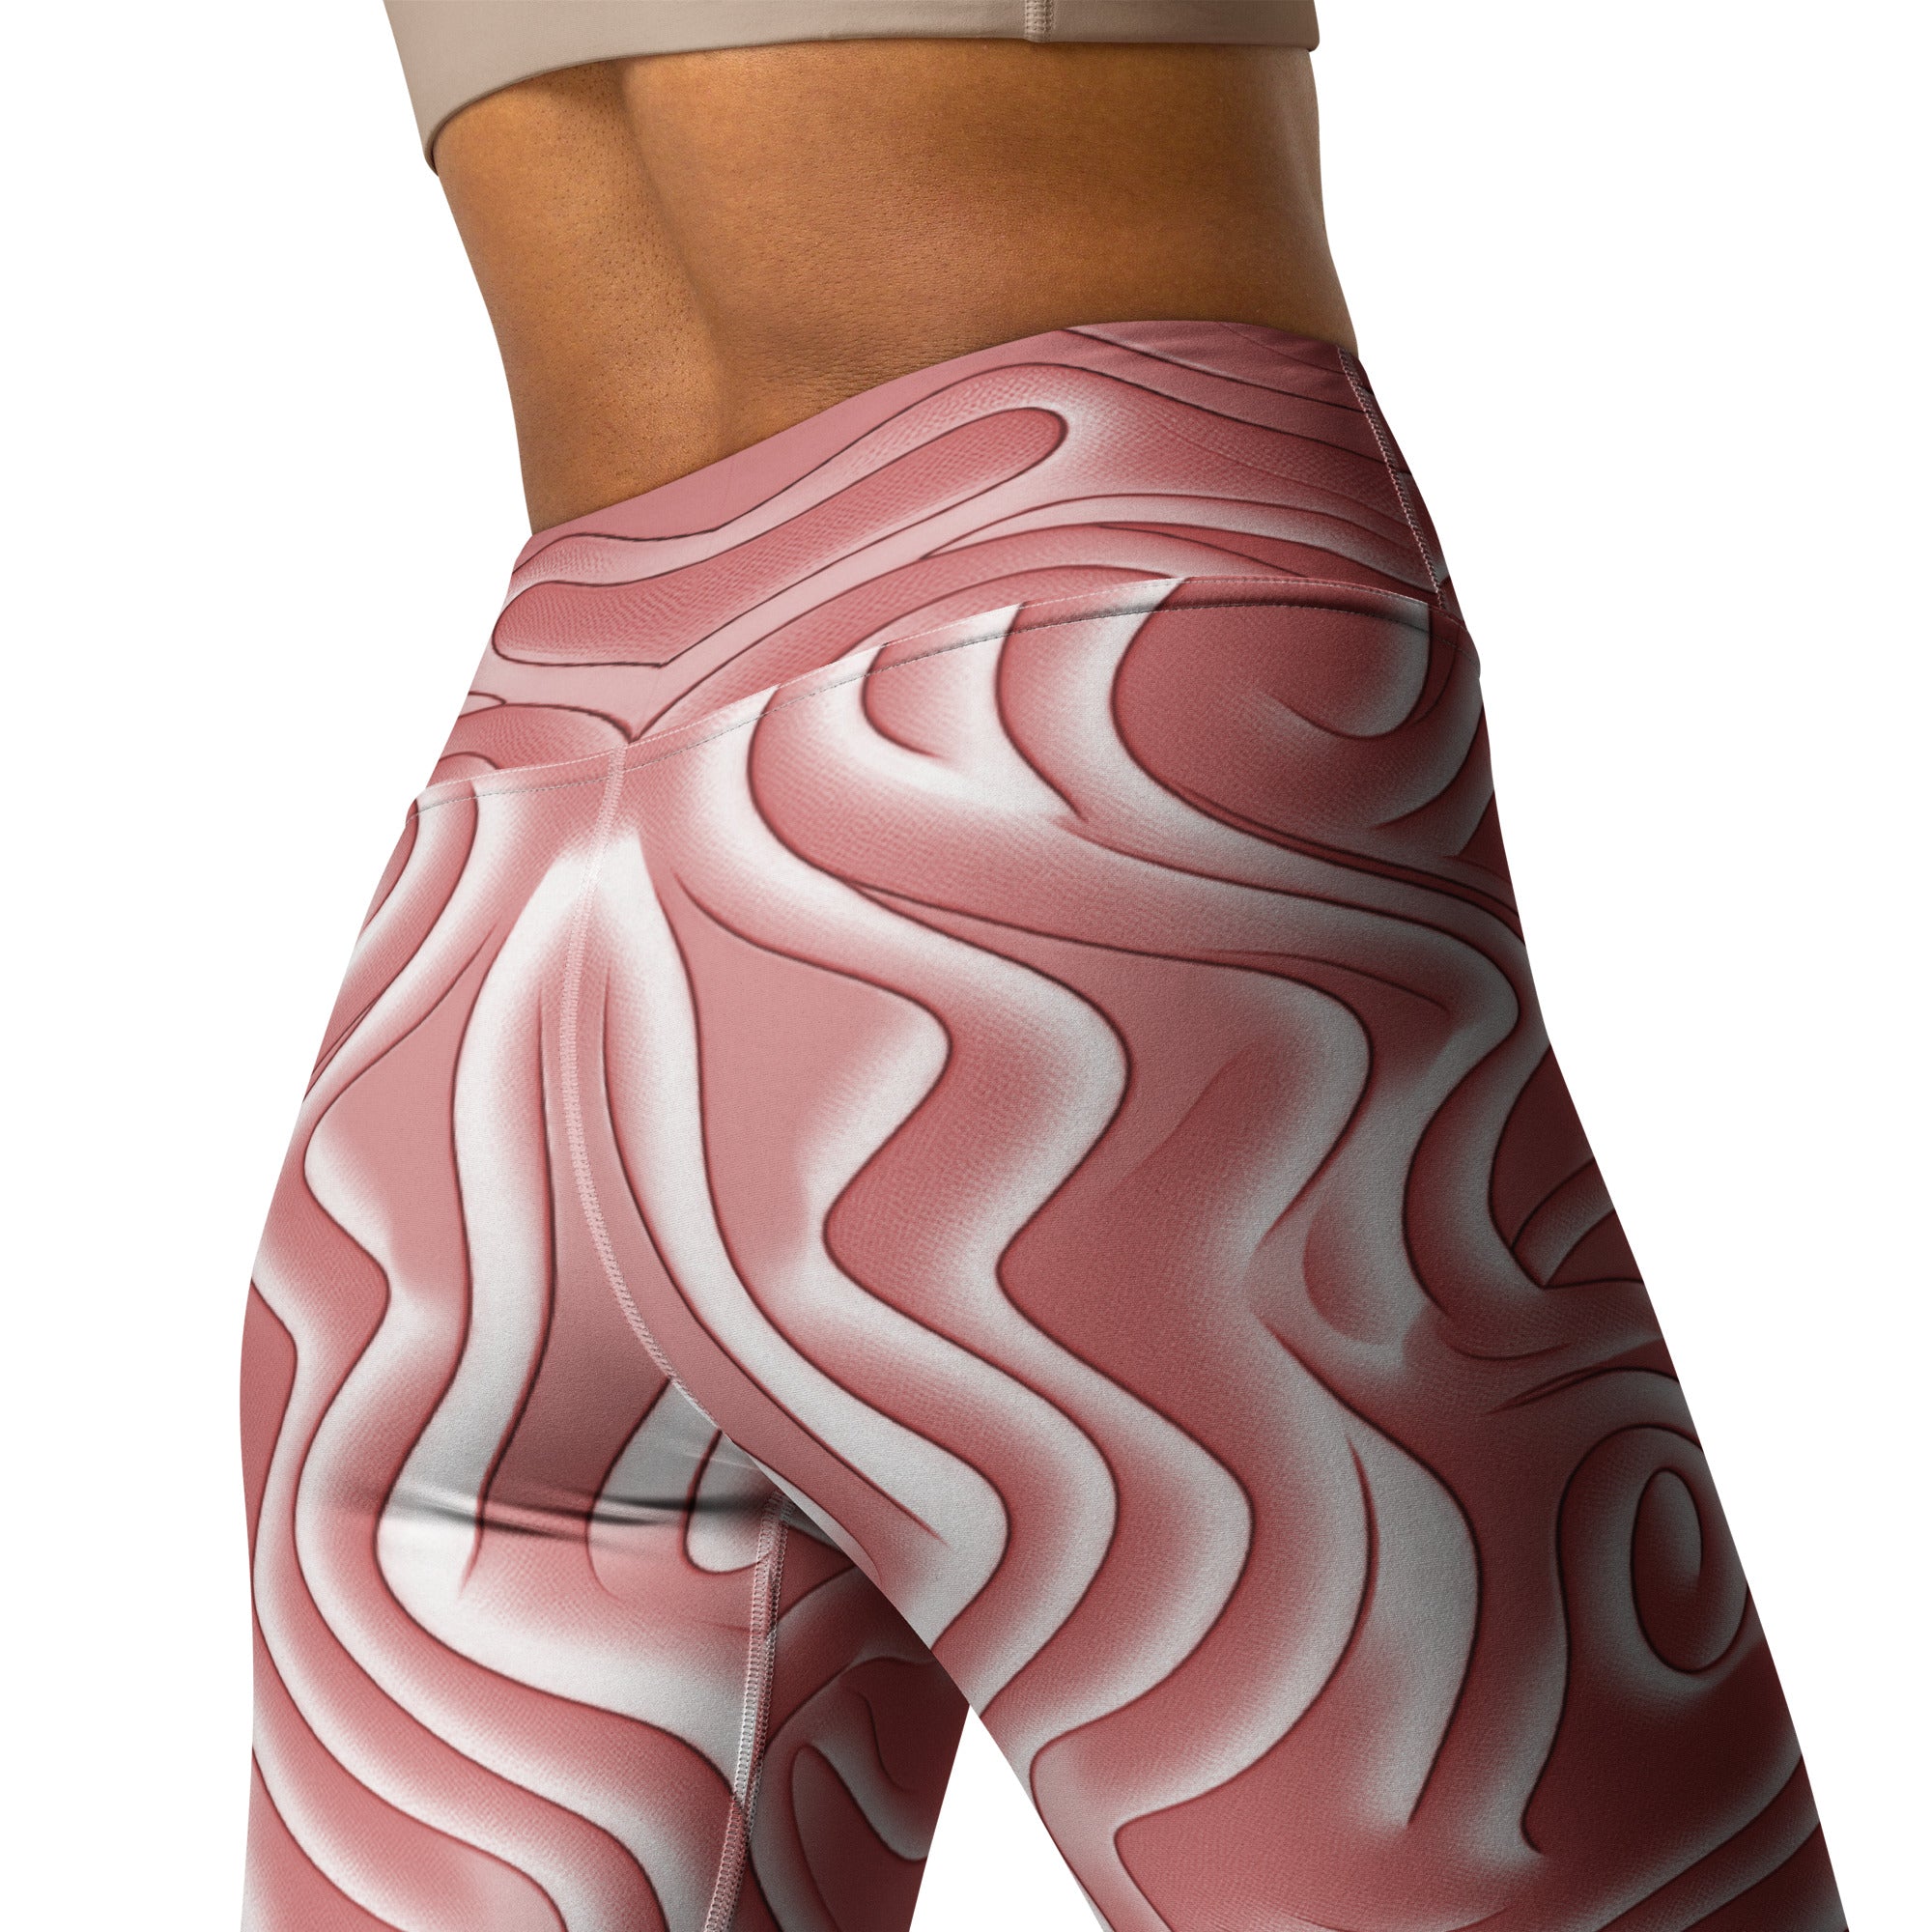 Model wearing Oceanic Rhythm All-Over Print Yoga Leggings while stretching.